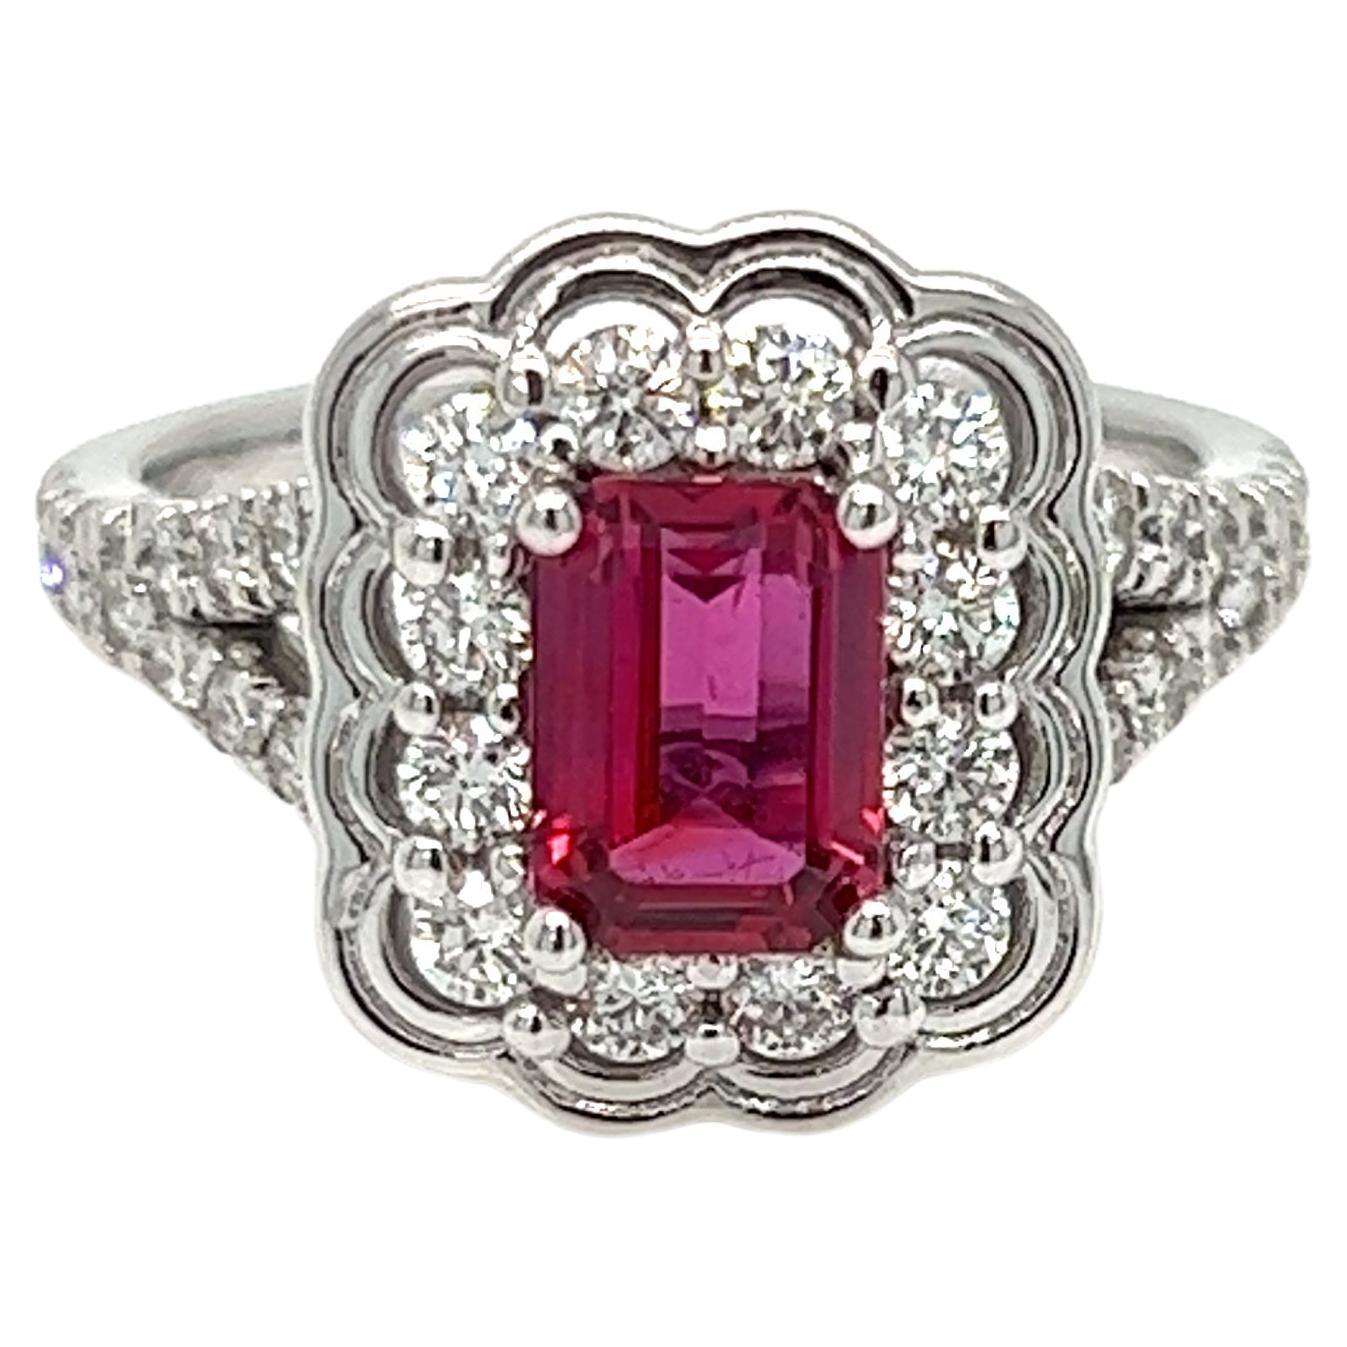 1.88 Carats Emerald Cut Ruby Diamond Halo Engagement Ring